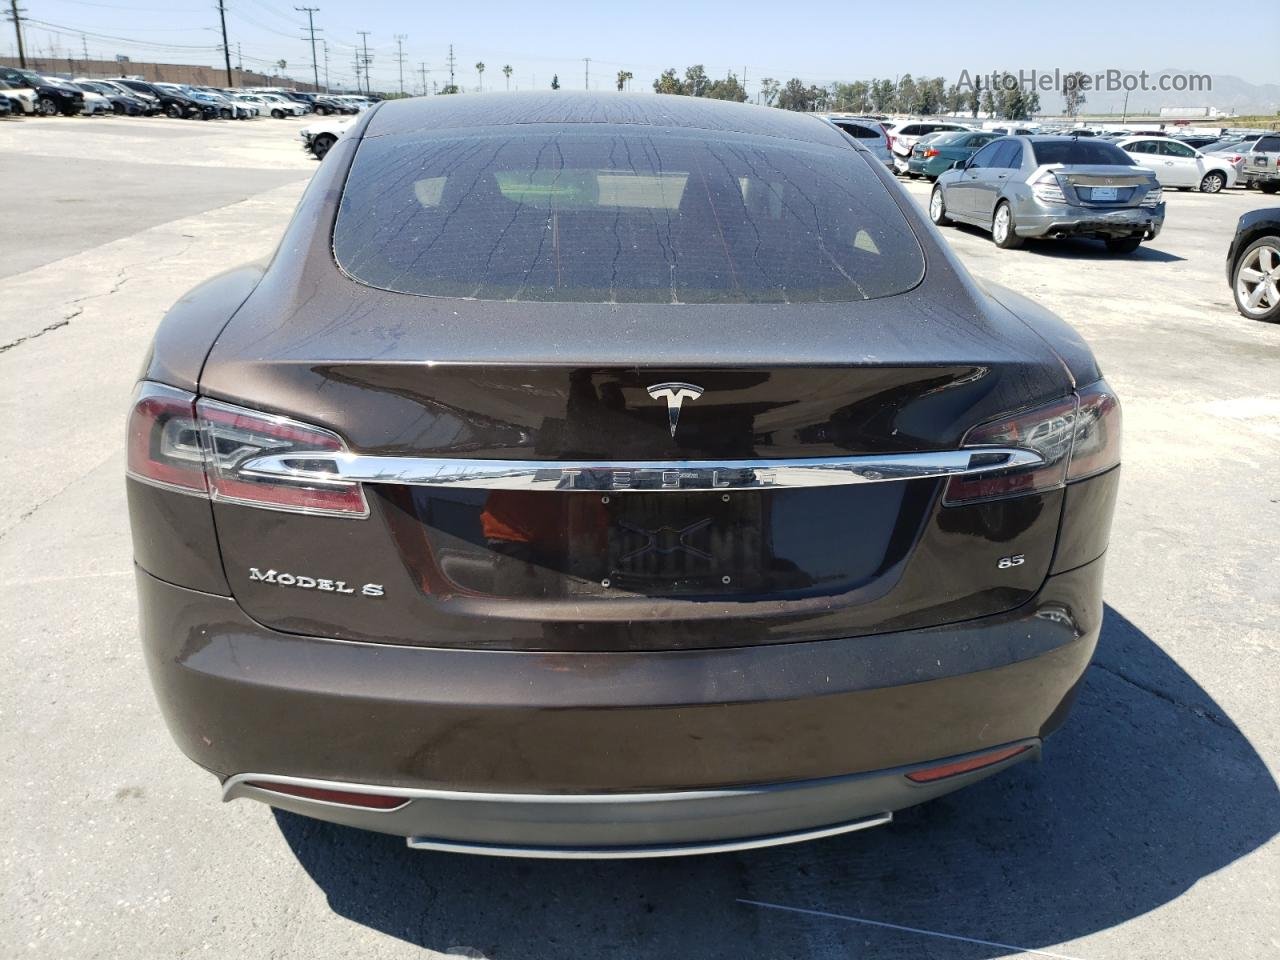 2013 Tesla Model S  Brown vin: 5YJSA1CN9DFP06815